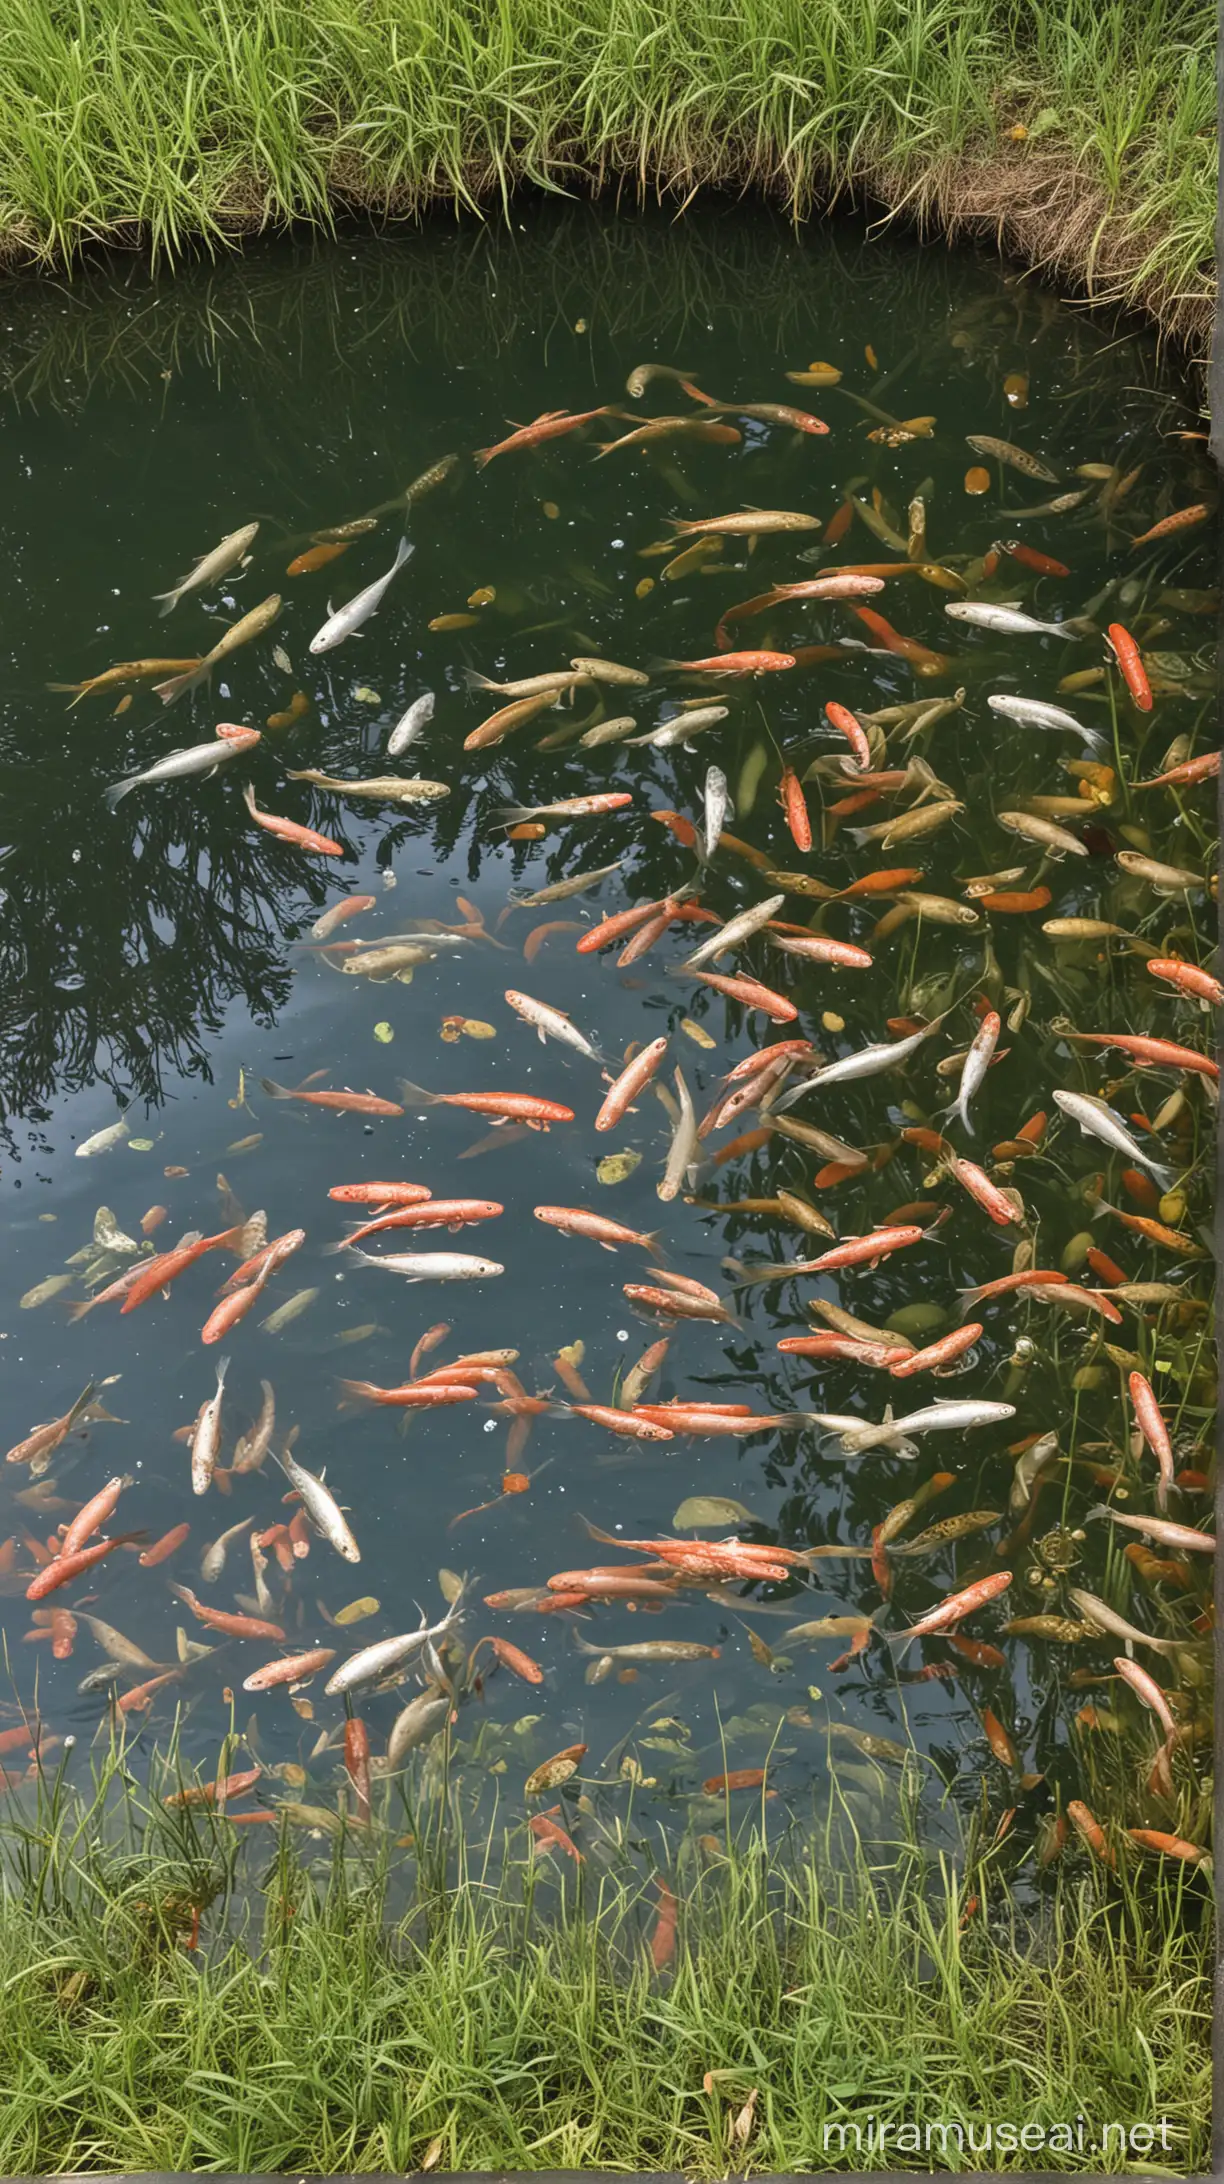 Bountiful Aquatic Harvest Clear Pond with Abundant Fish and Shrimp